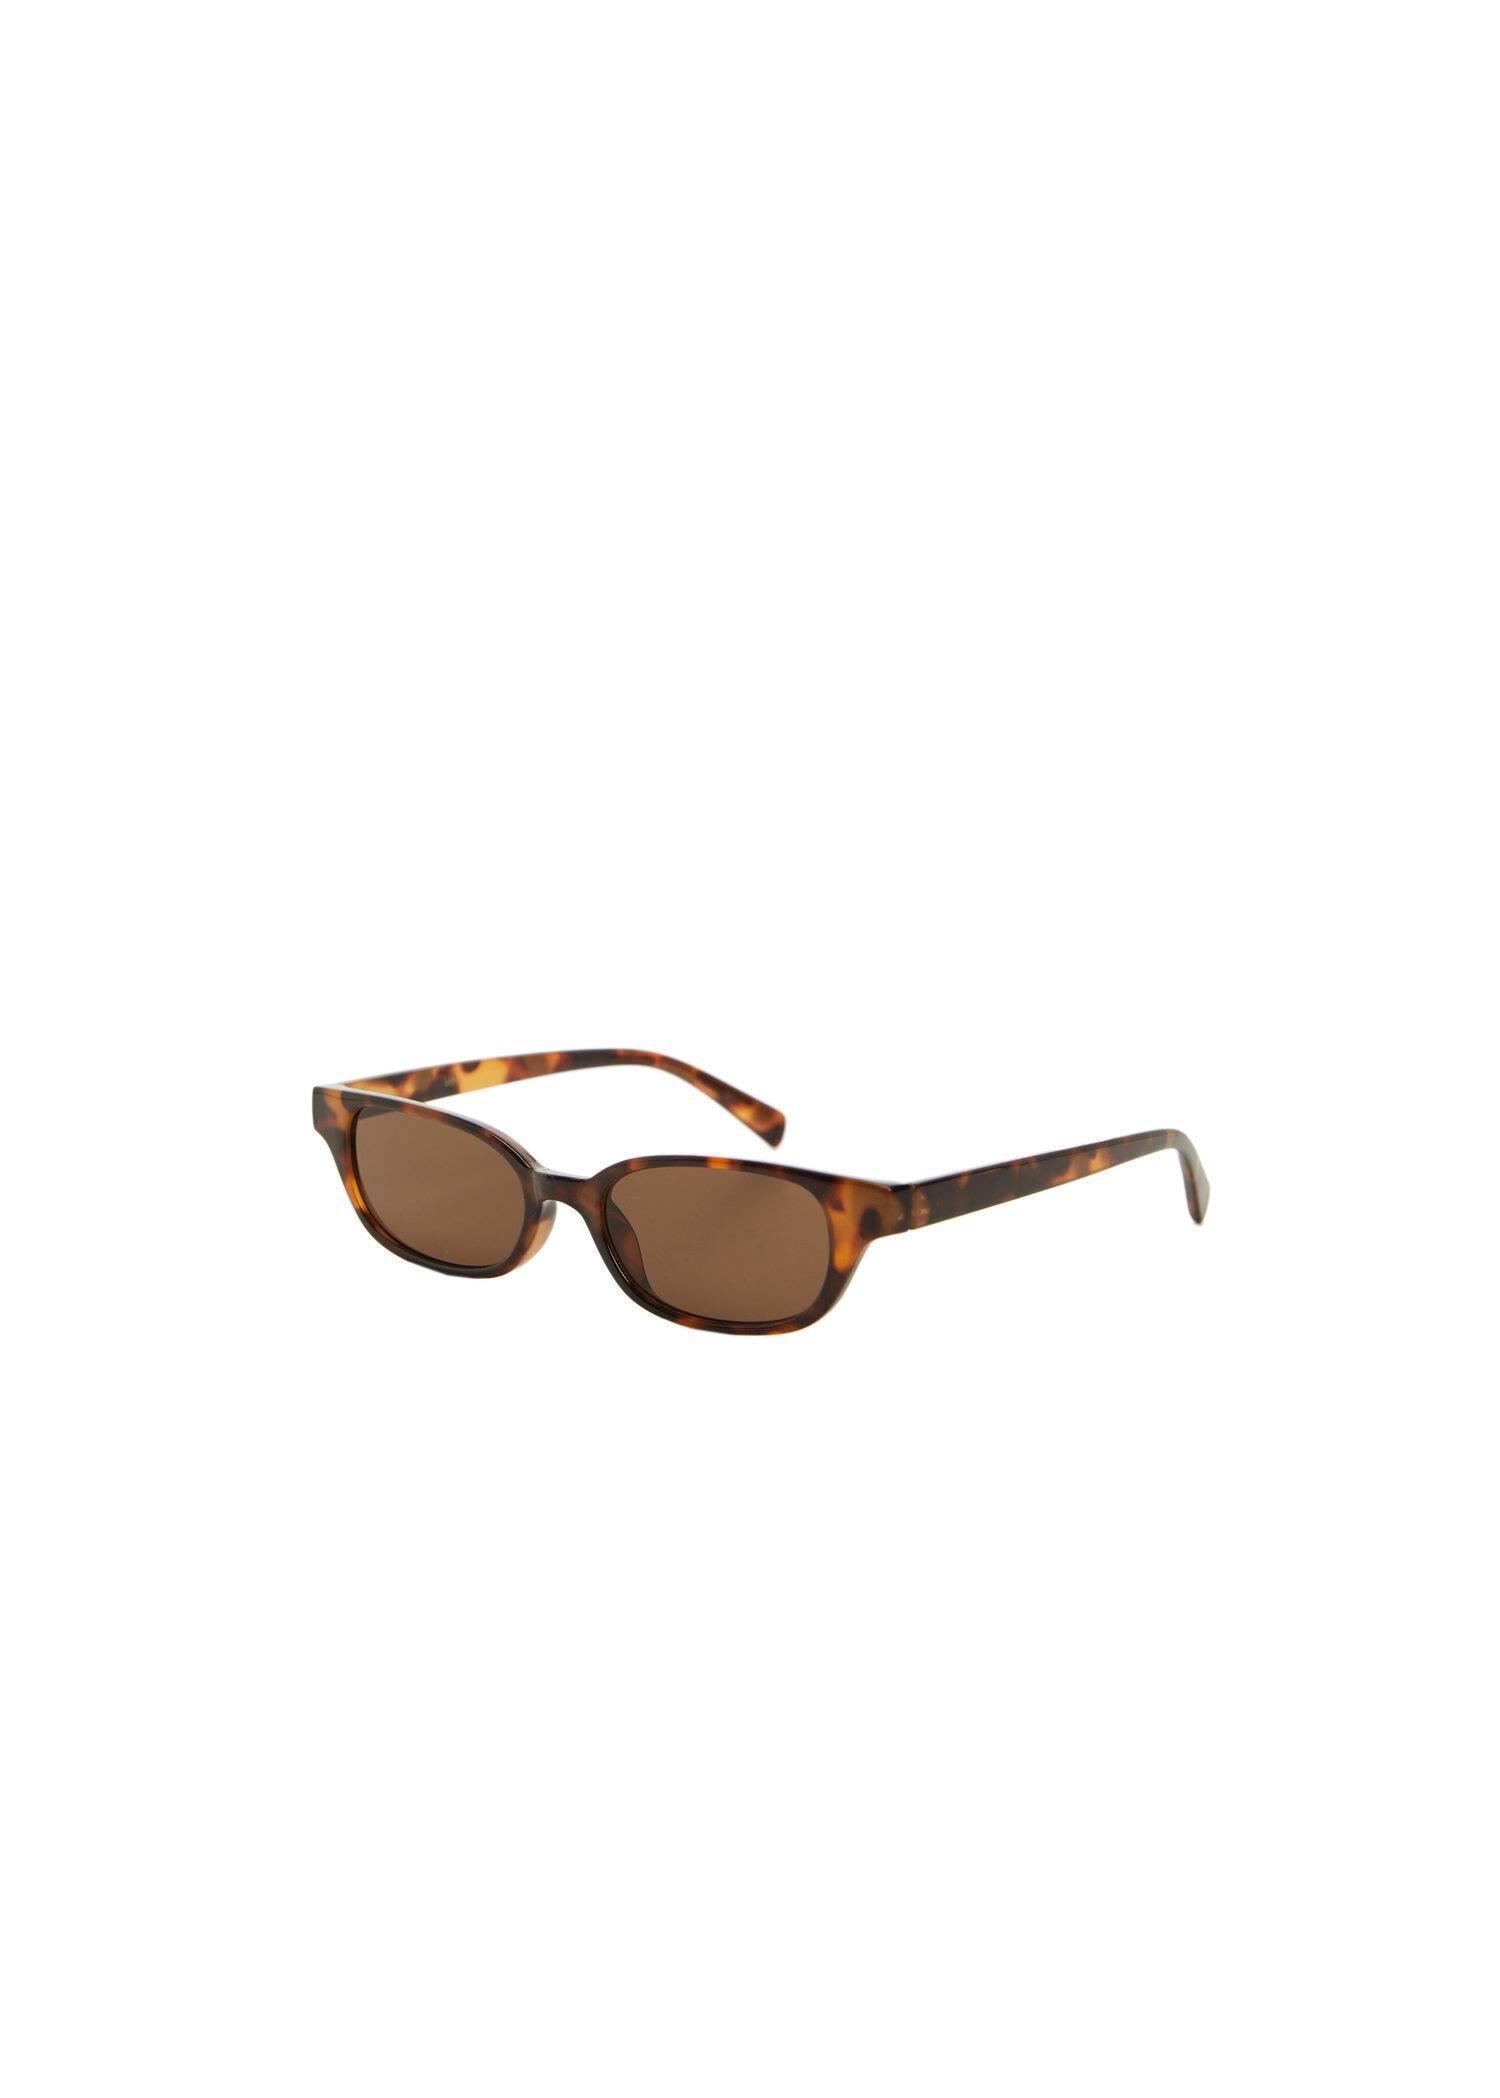 Mango - Brown Retro Style Sunglasses